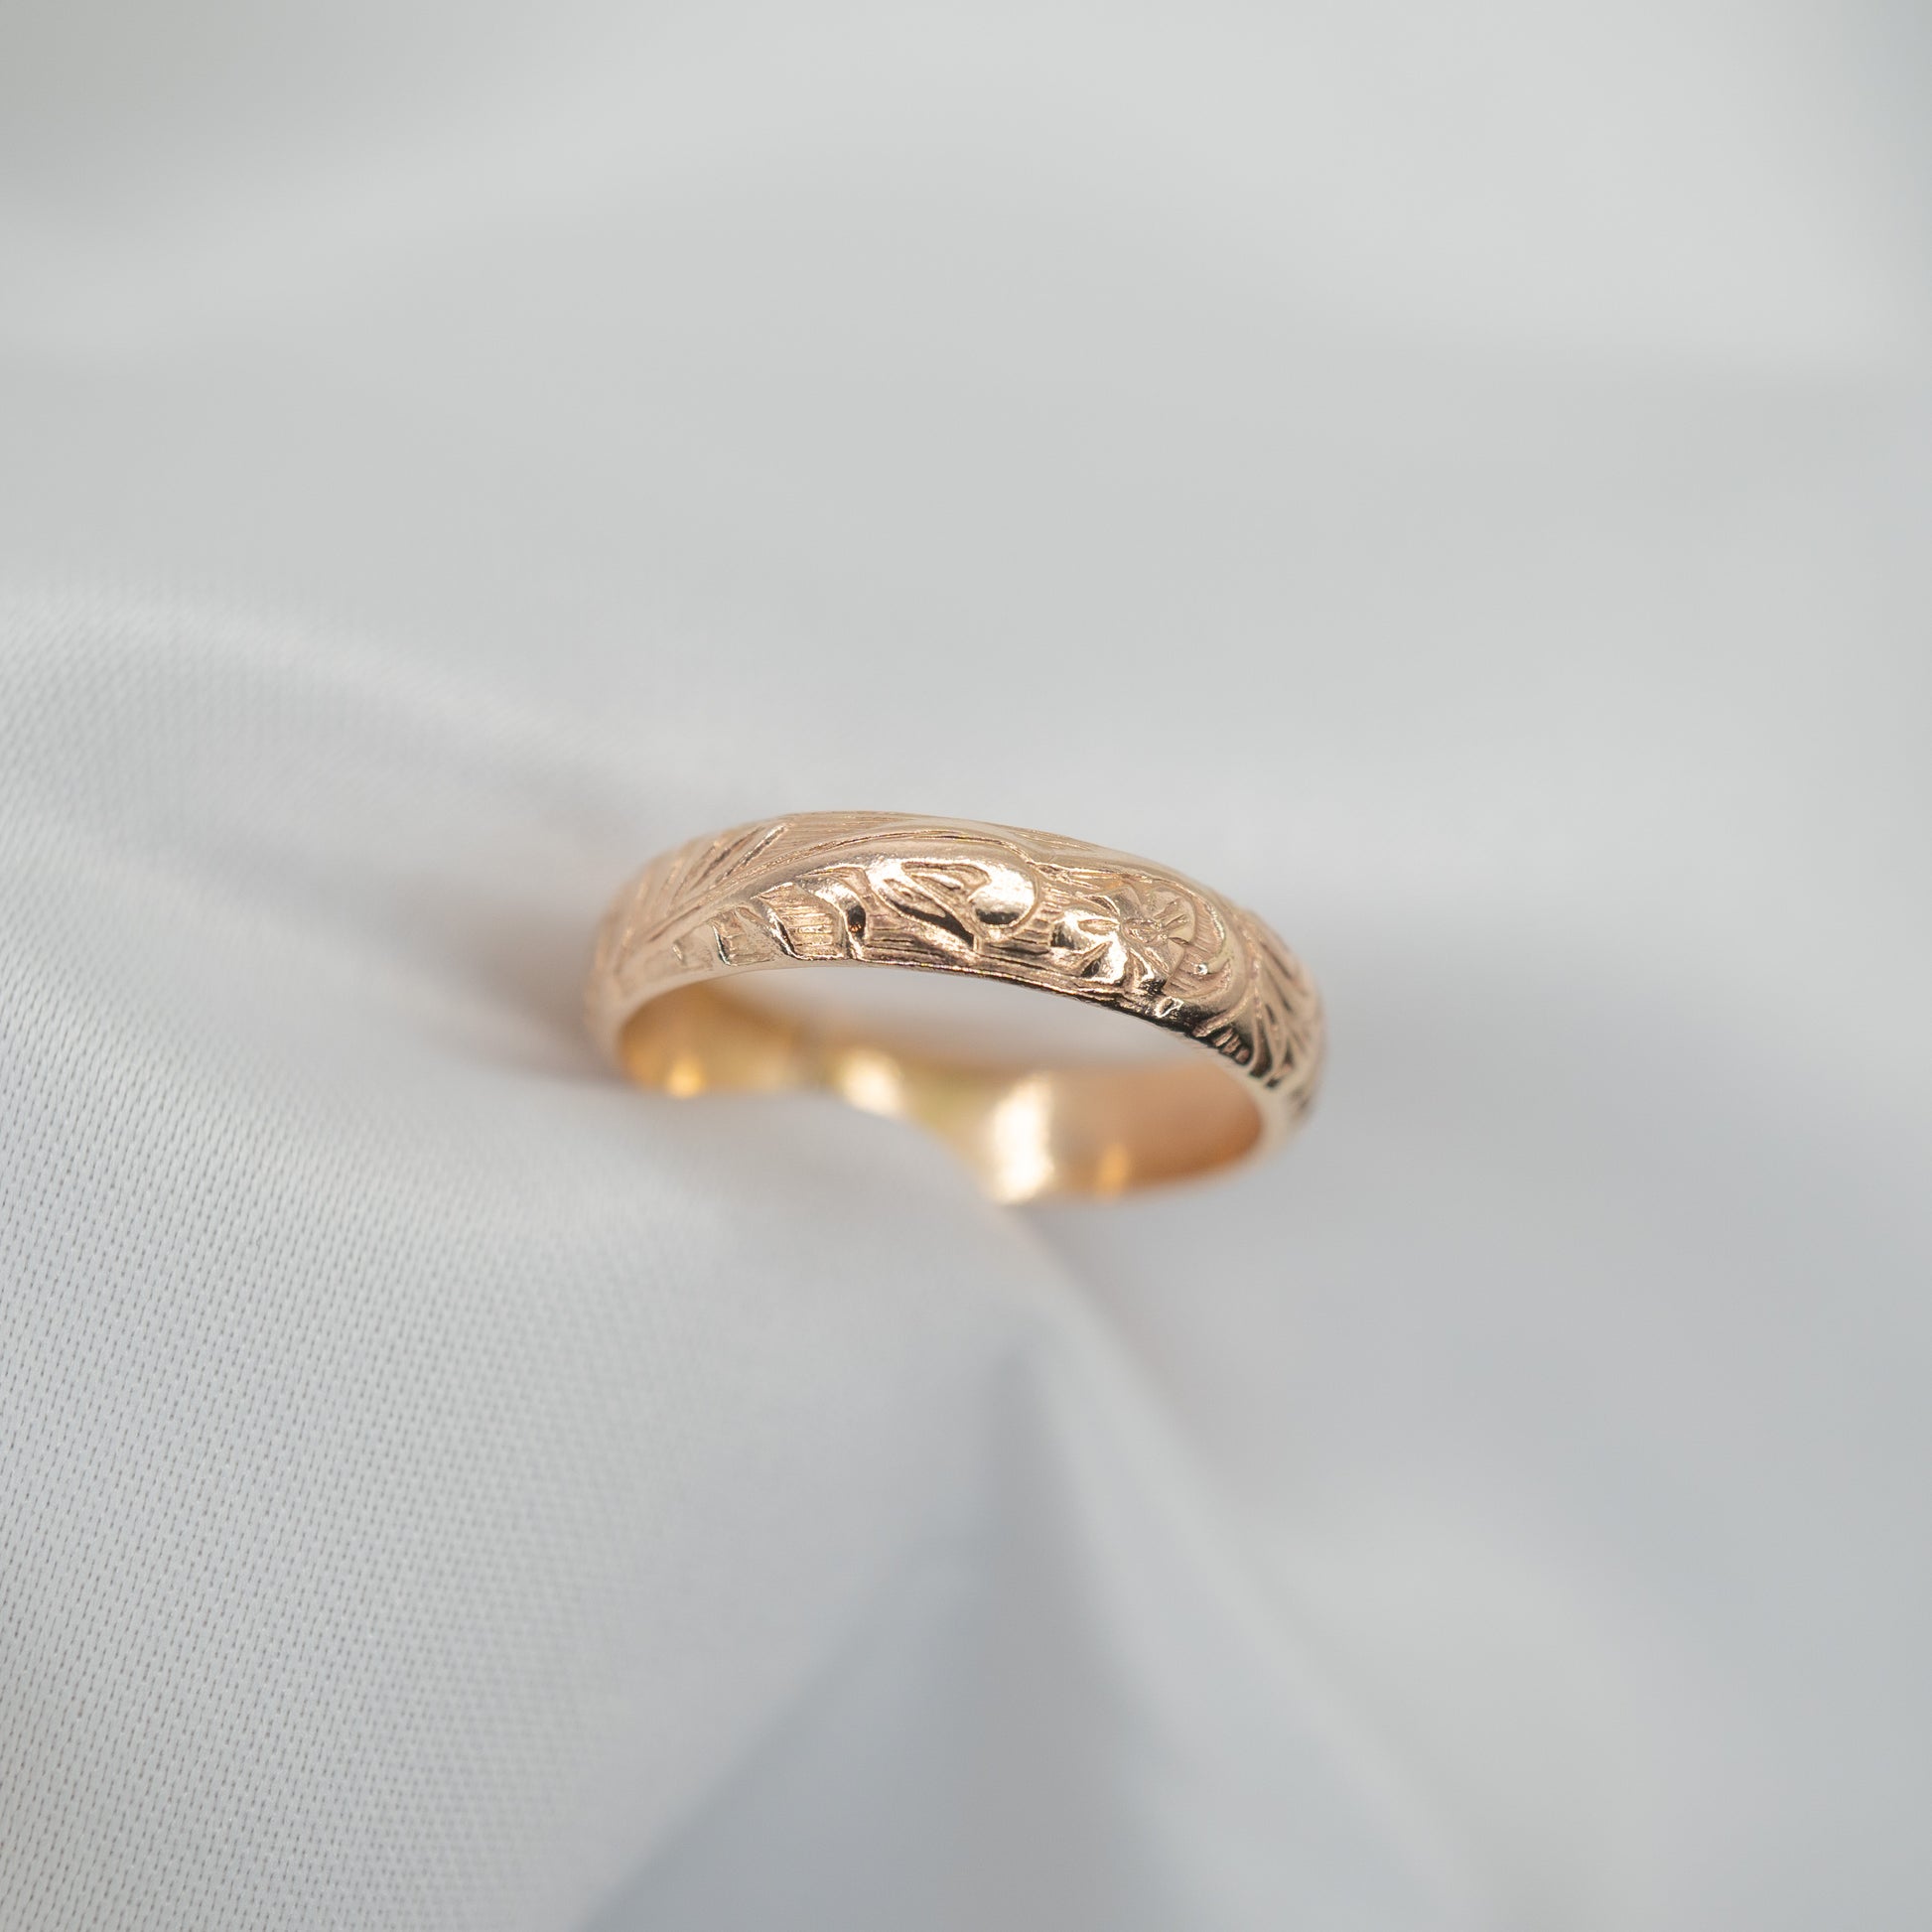 Gold Filled Vintage Pattern Ring - shot on white - close up